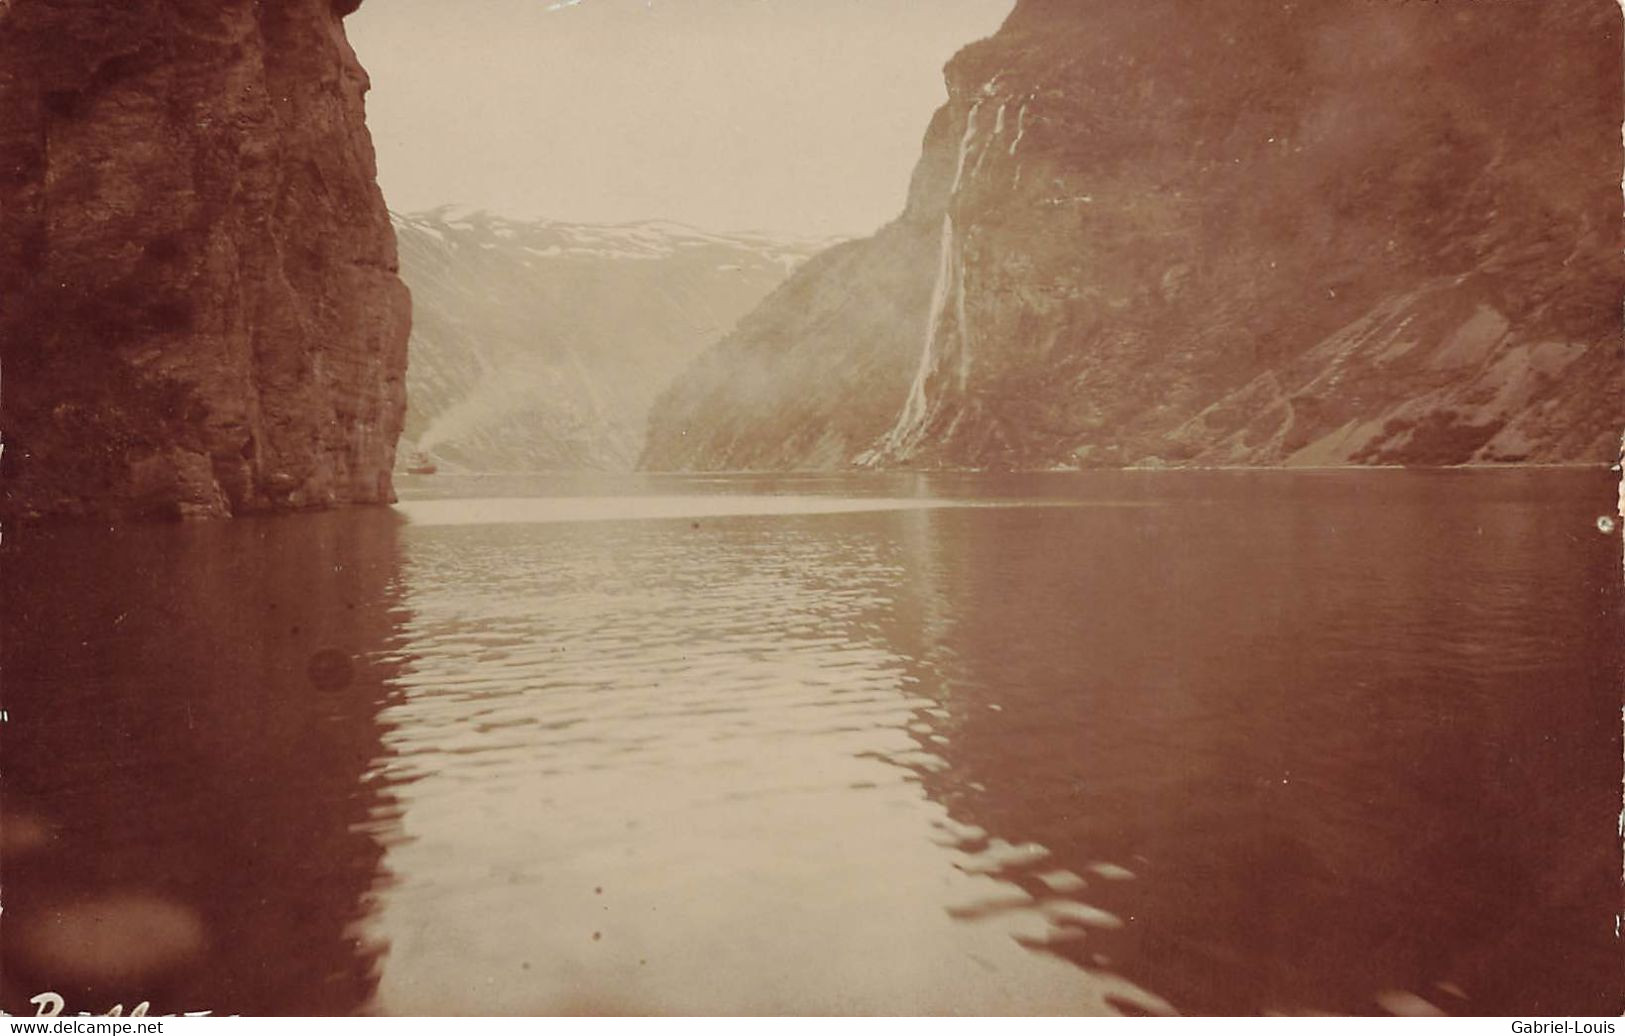 Postcard Photo Norvège Merok-Geiranger Syv Sostre- Album 1912 - Norway